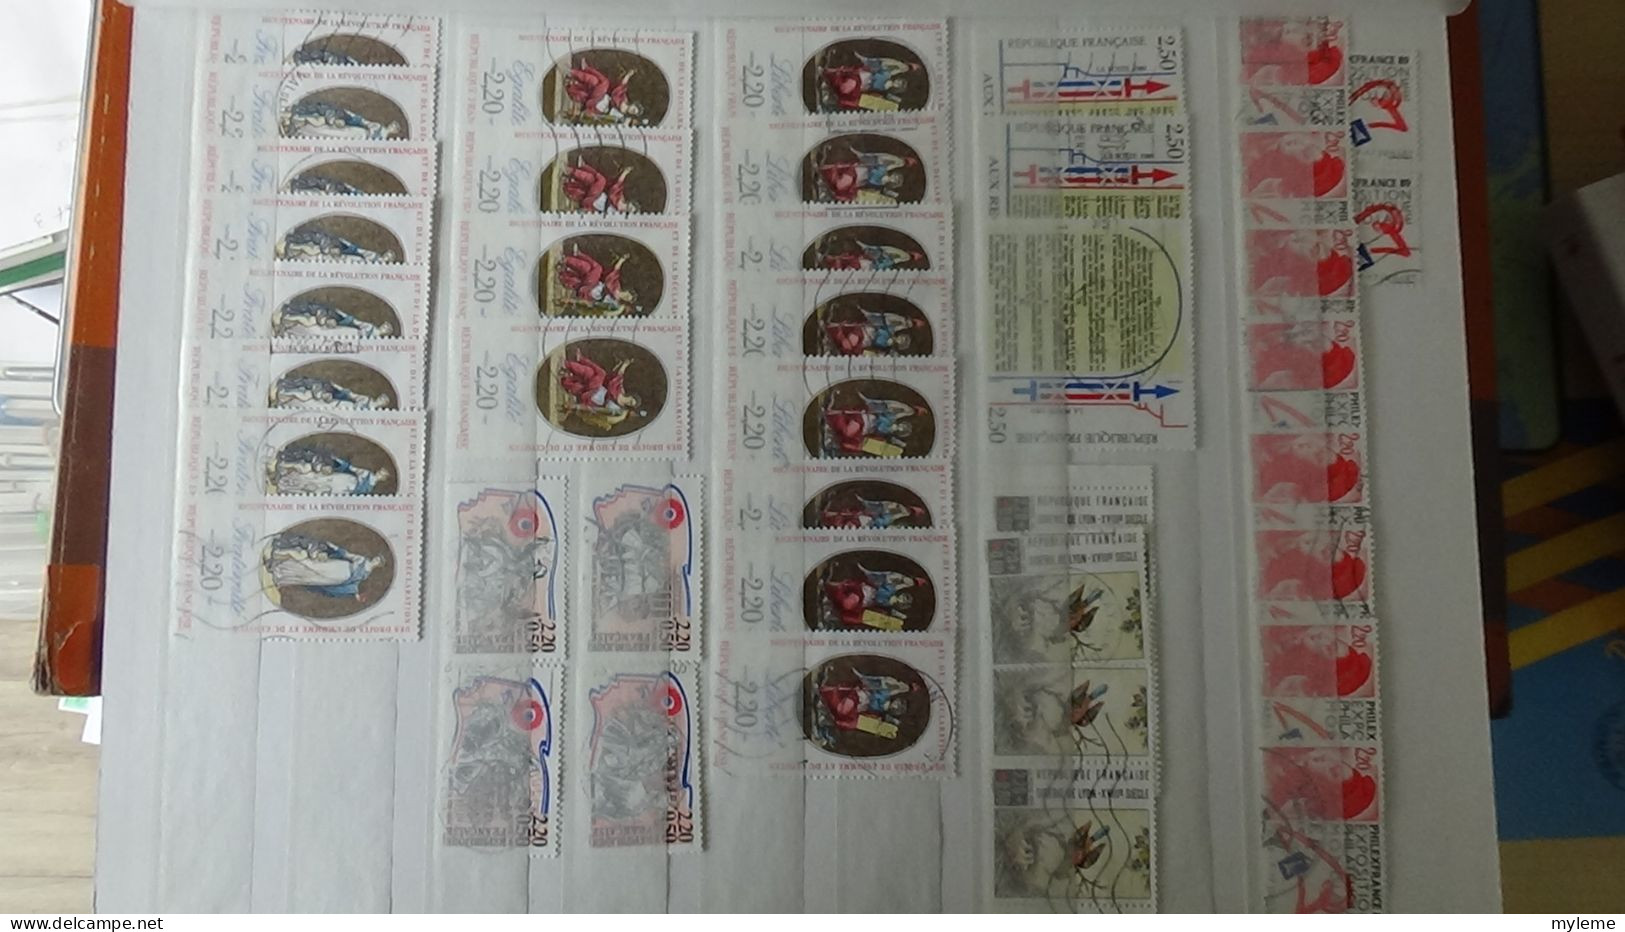 BG4 Ensemble de timbres de divers pays + France N° 56 ** Cote 1100 euros. A saisir !!!